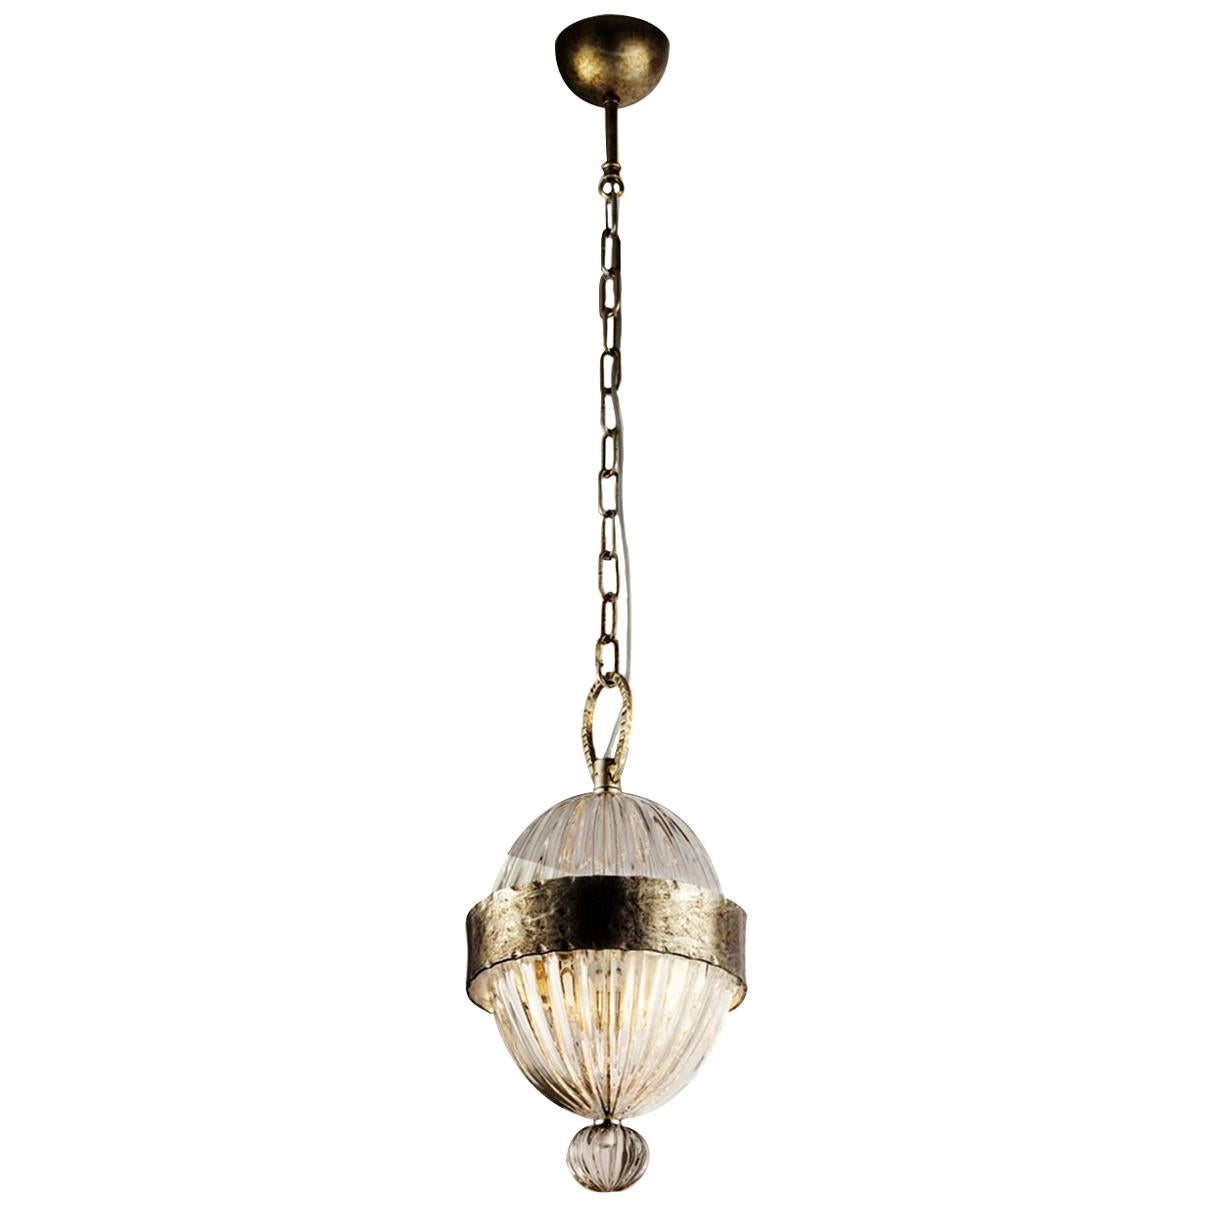 Decorative Silver Pendant Lamp For Sale